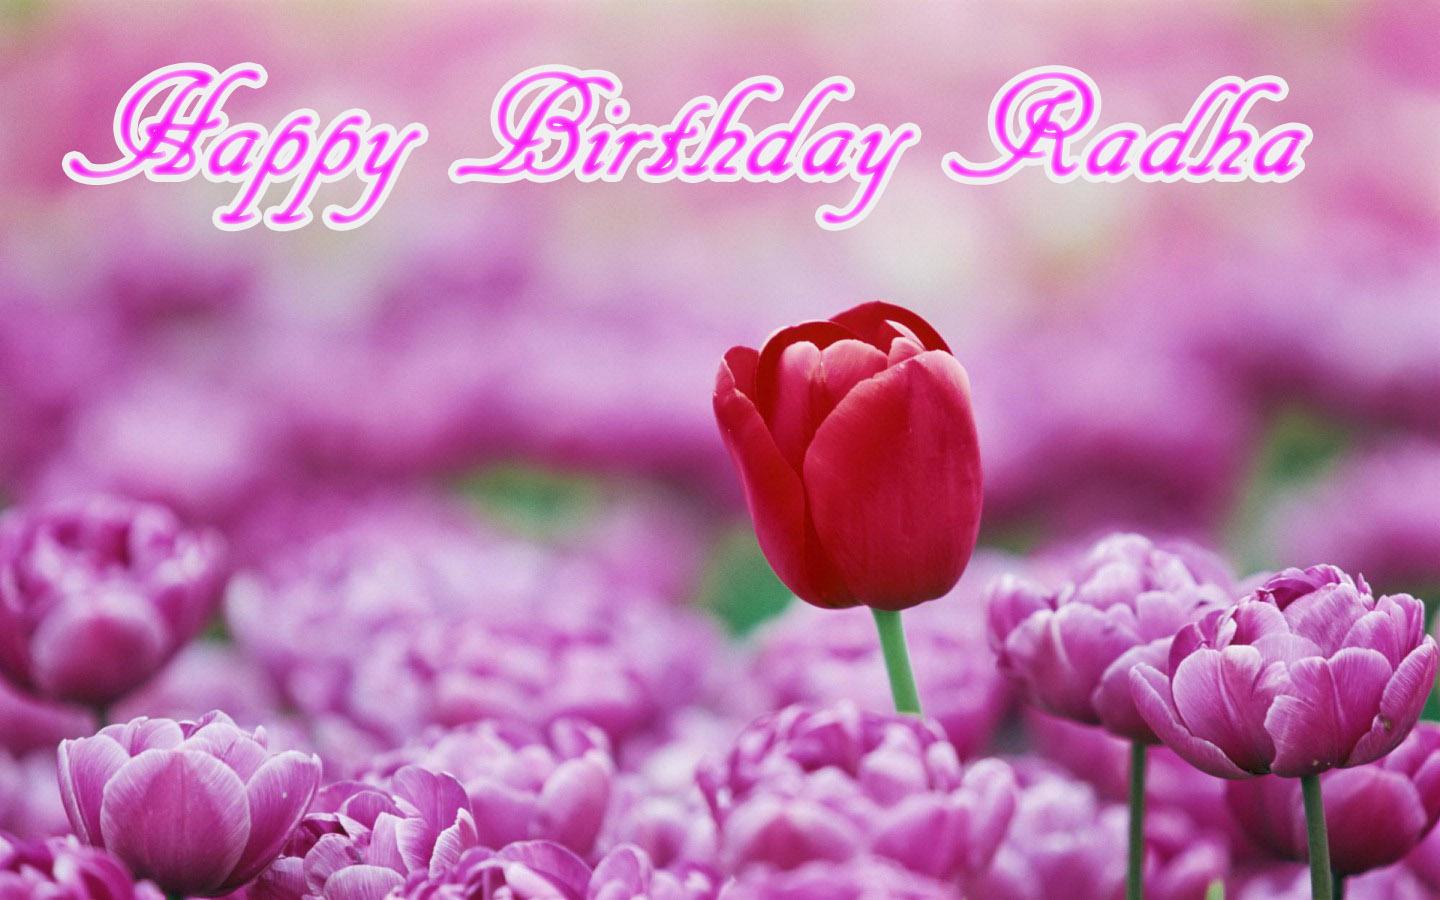  Happy Birthday Radha!

Have a wonderful Day!!! :) 